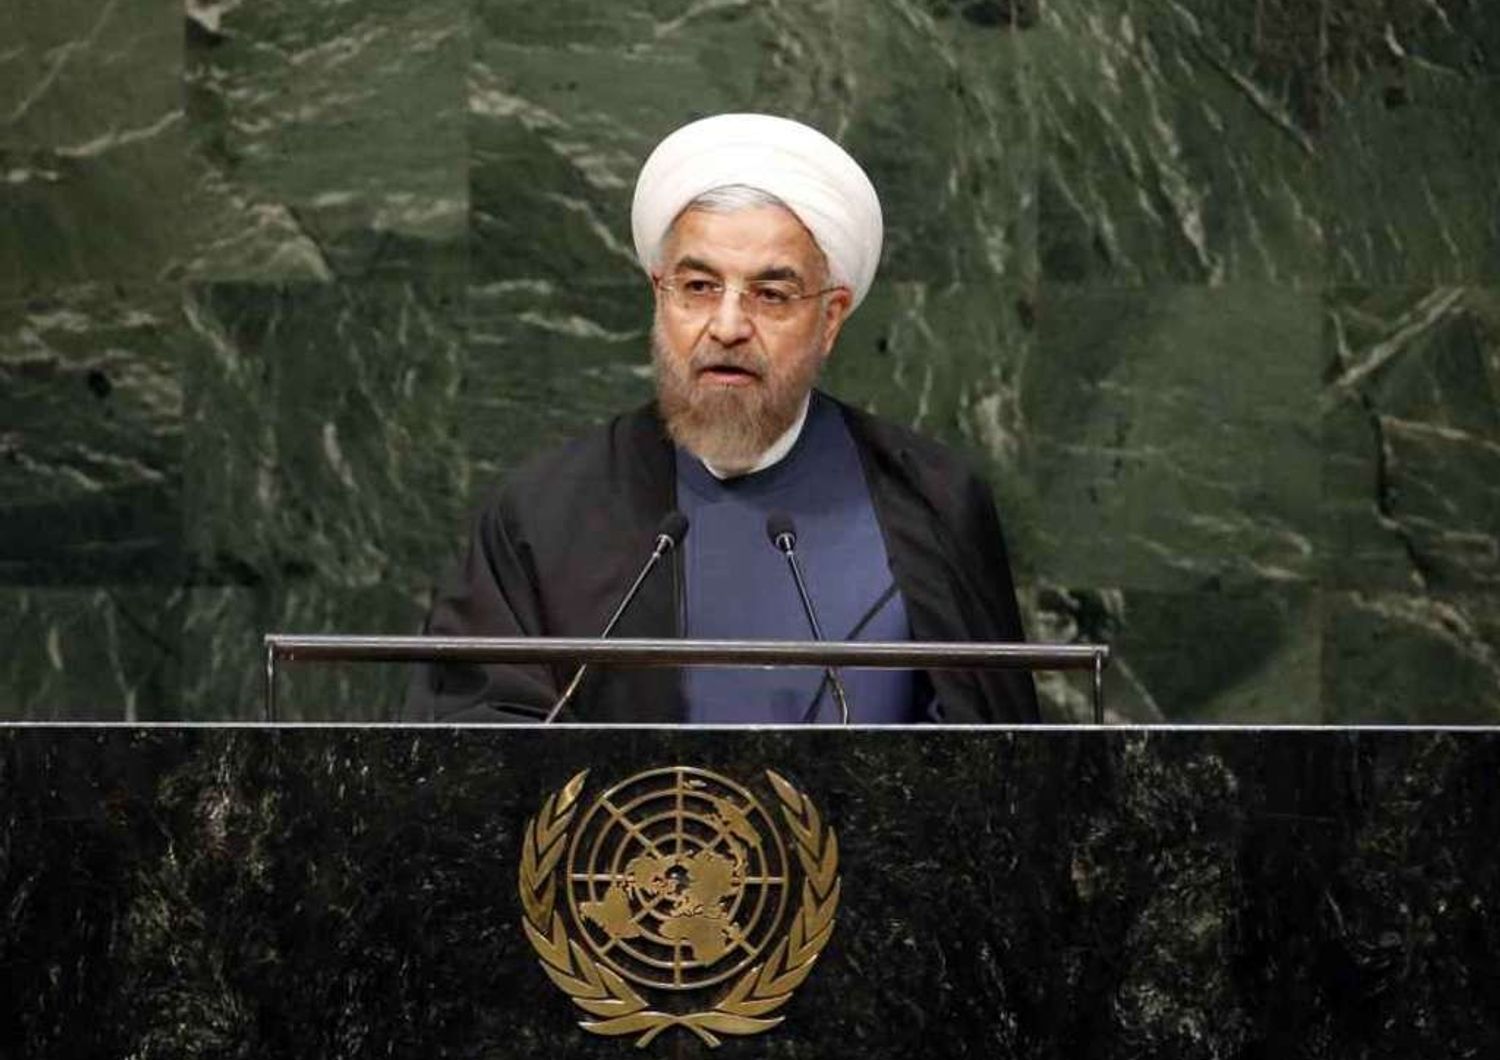 IS goal is destruction of civilisation, says Rouhani